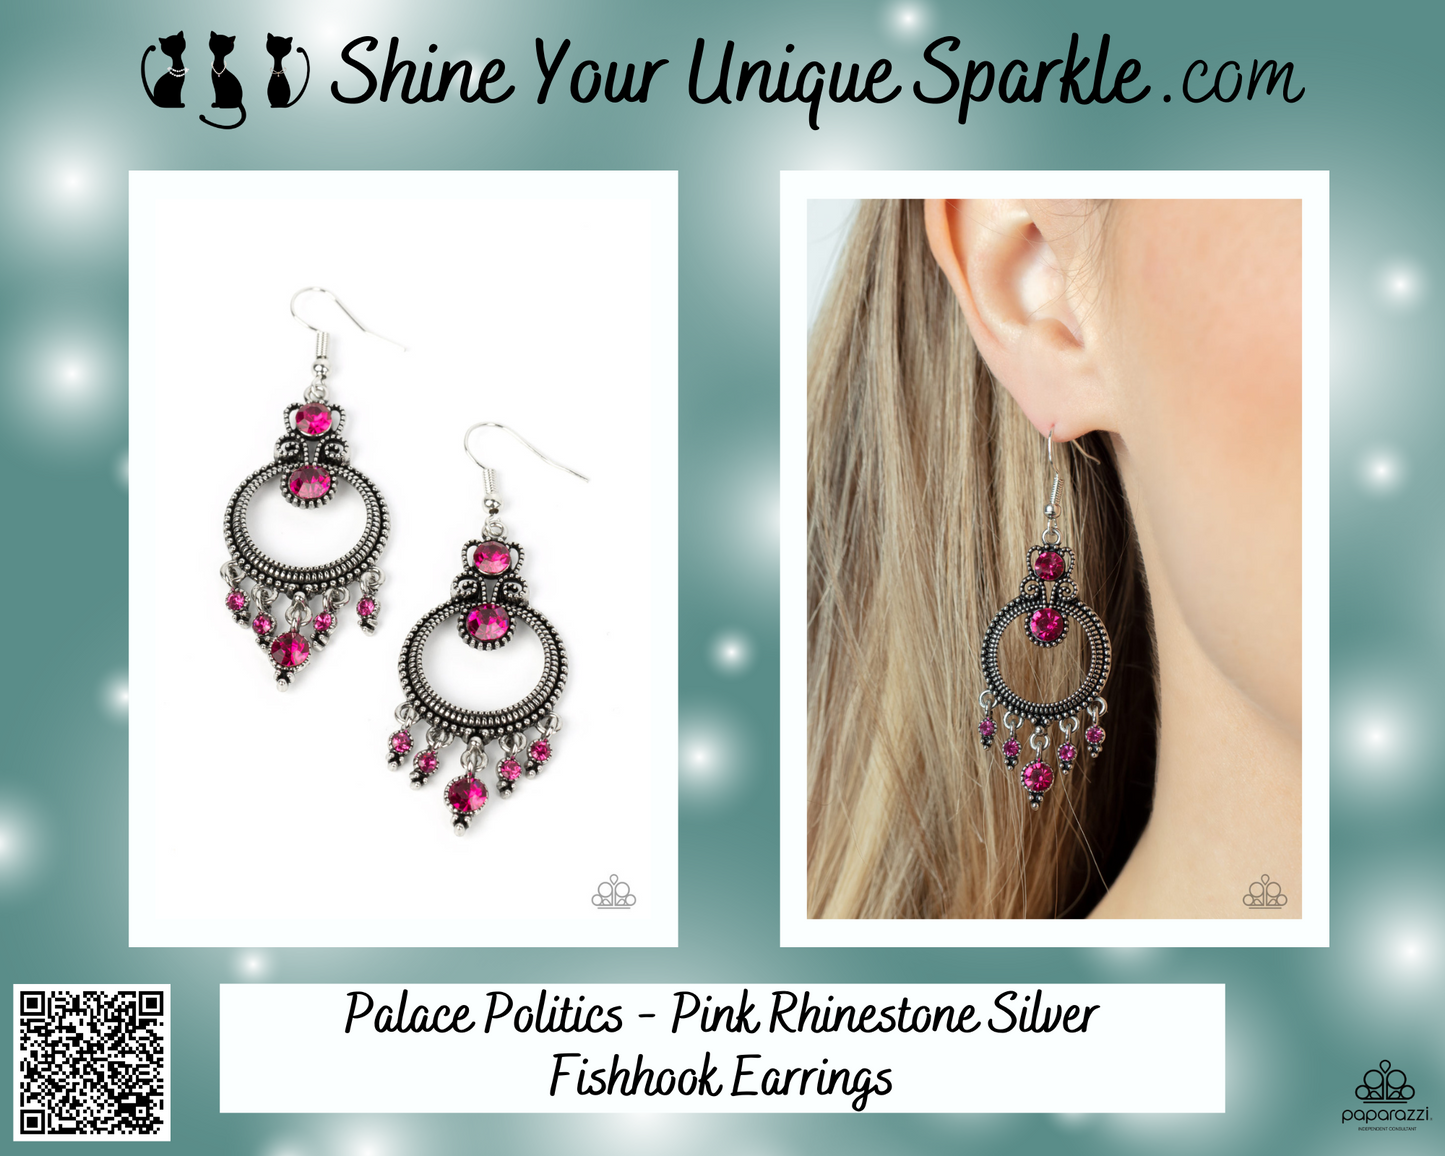 Palace Politics - Pink Rhinestone Silver Fishhook Earrings